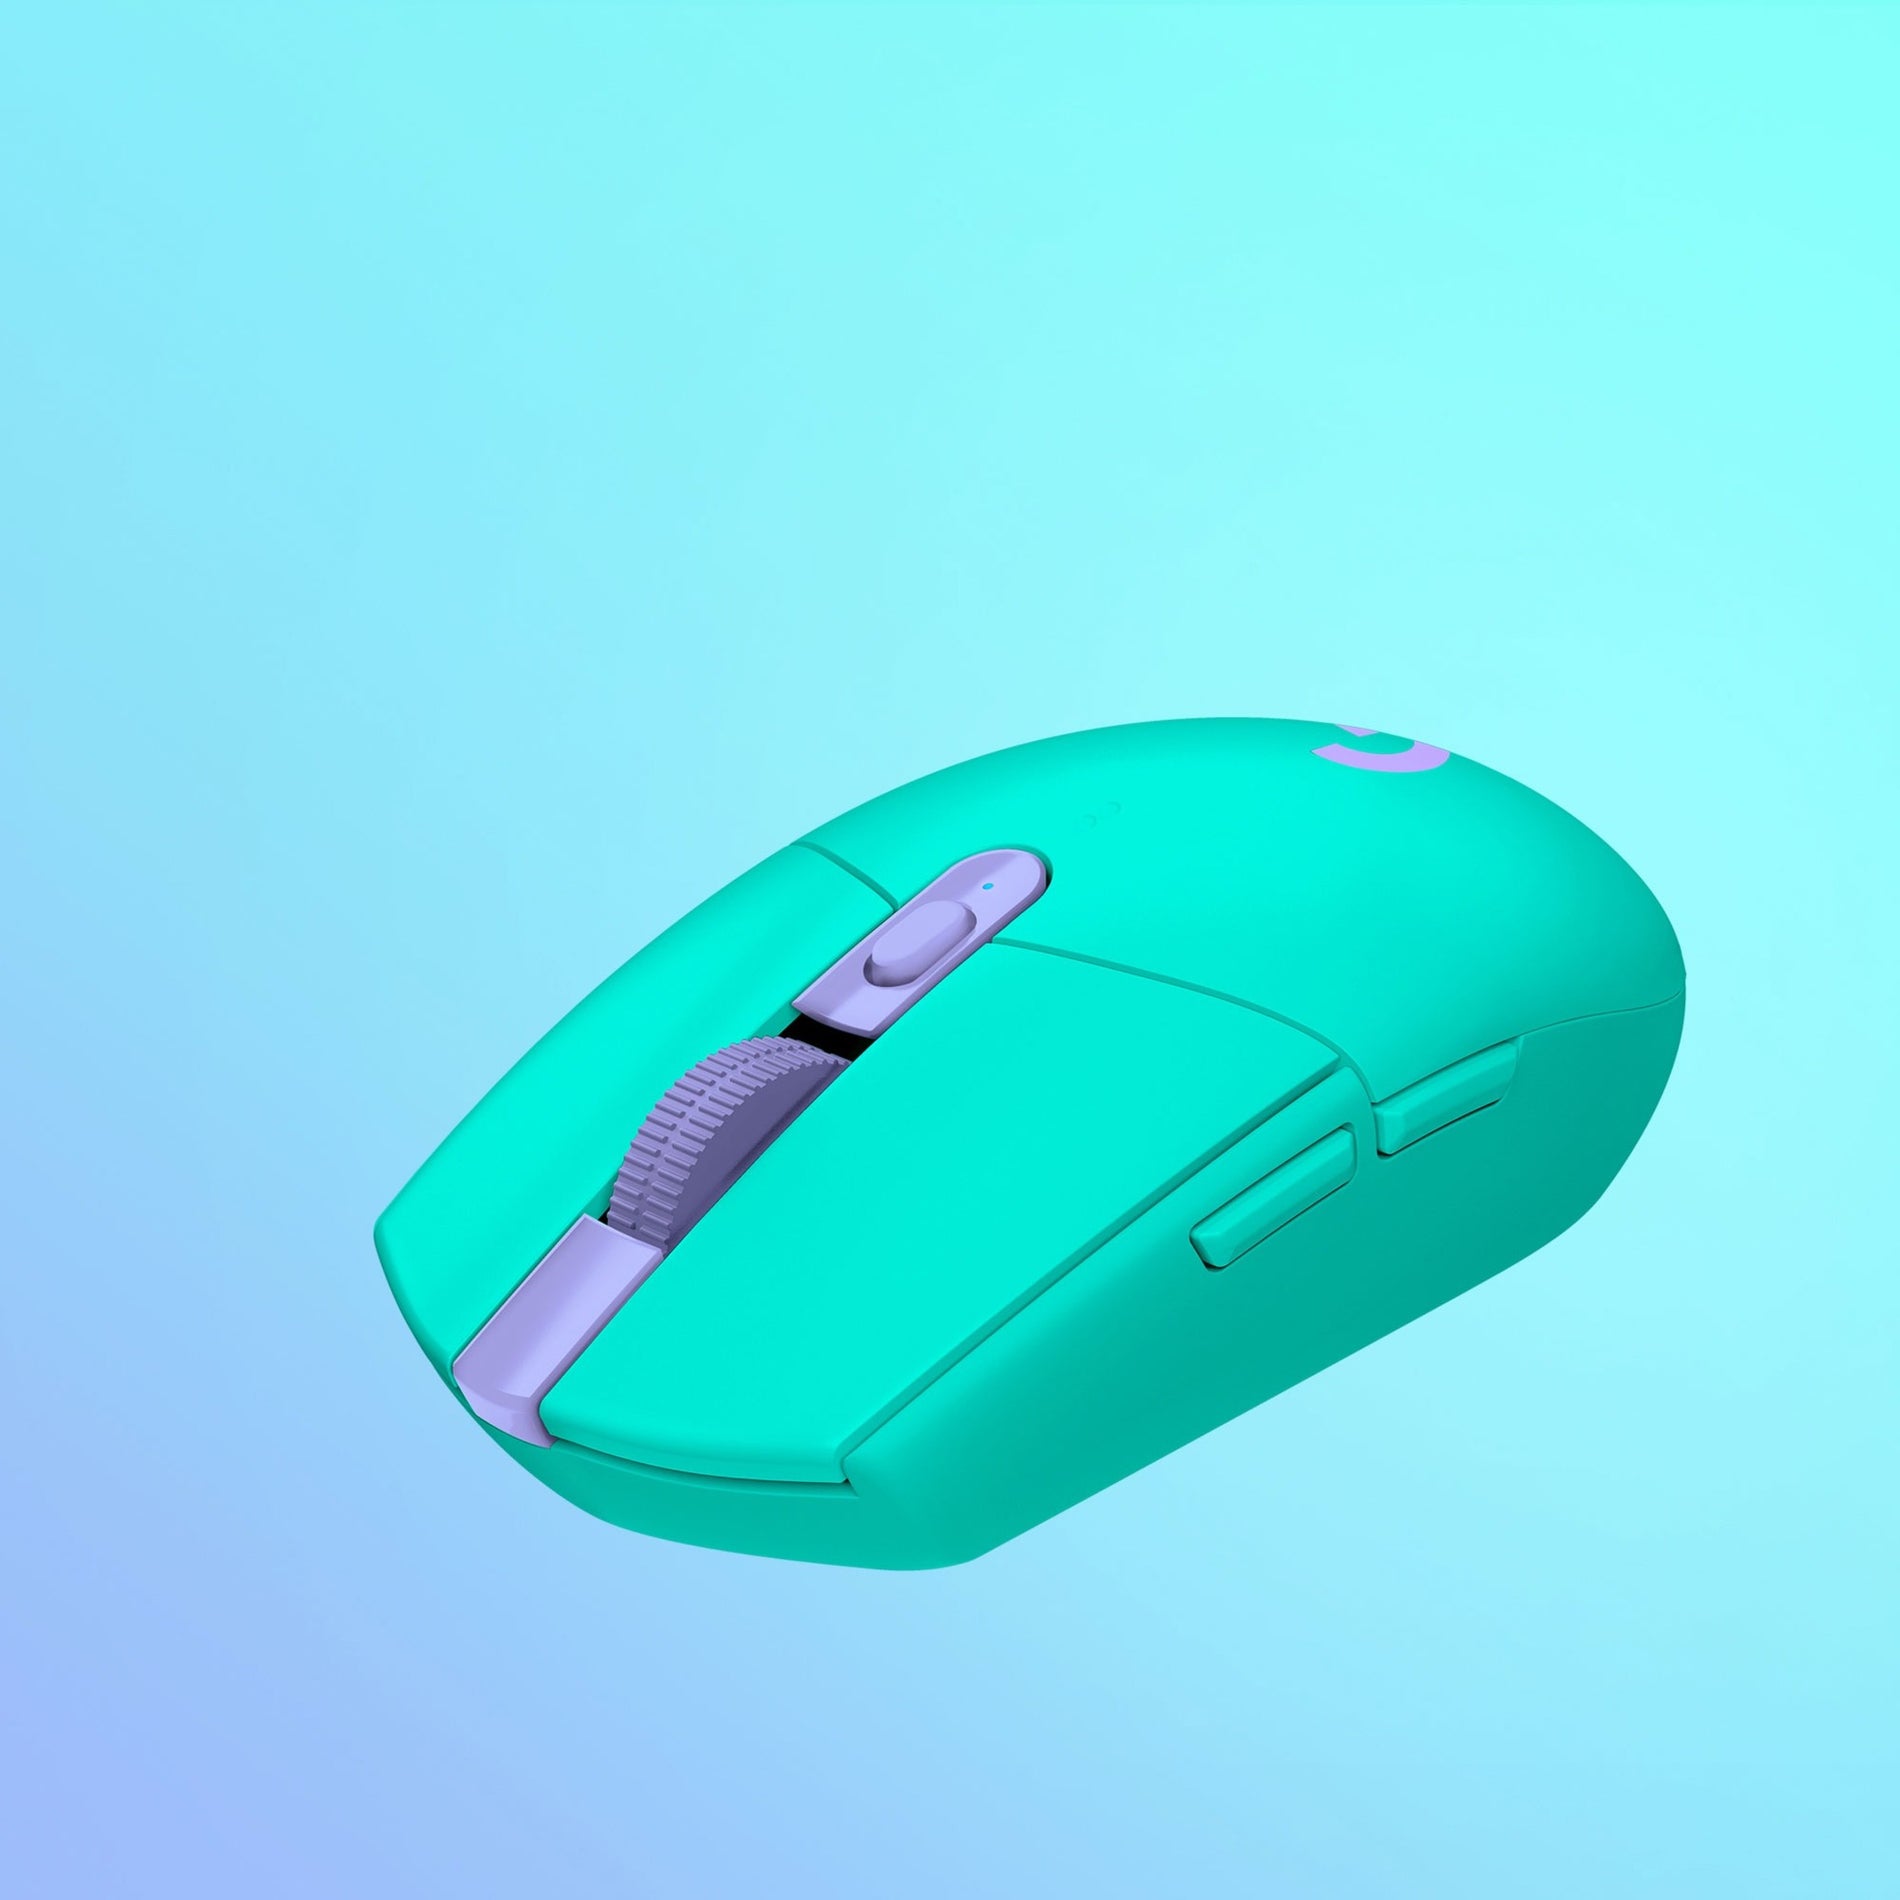 Logitech 910-006376 G305 LIGHTSPEED Wireless Gaming Mouse, 2 Year Warranty, 12000 dpi, 2.4 GHz, 6 Programmable Buttons